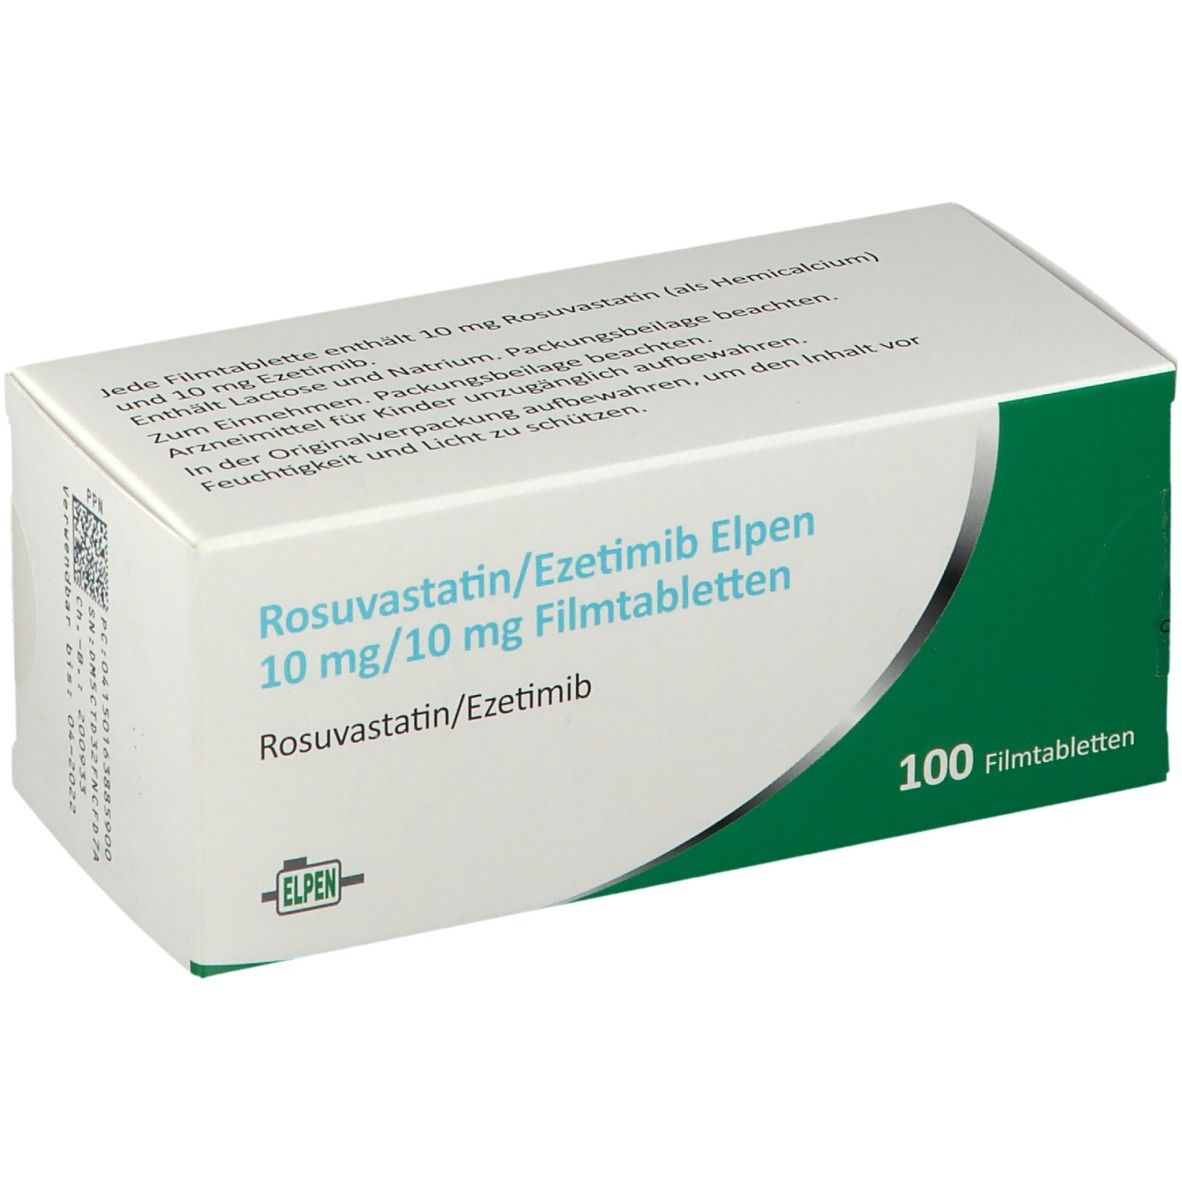 Rosuvastatin/Ezetimib Elpen 10 mg/10 mg